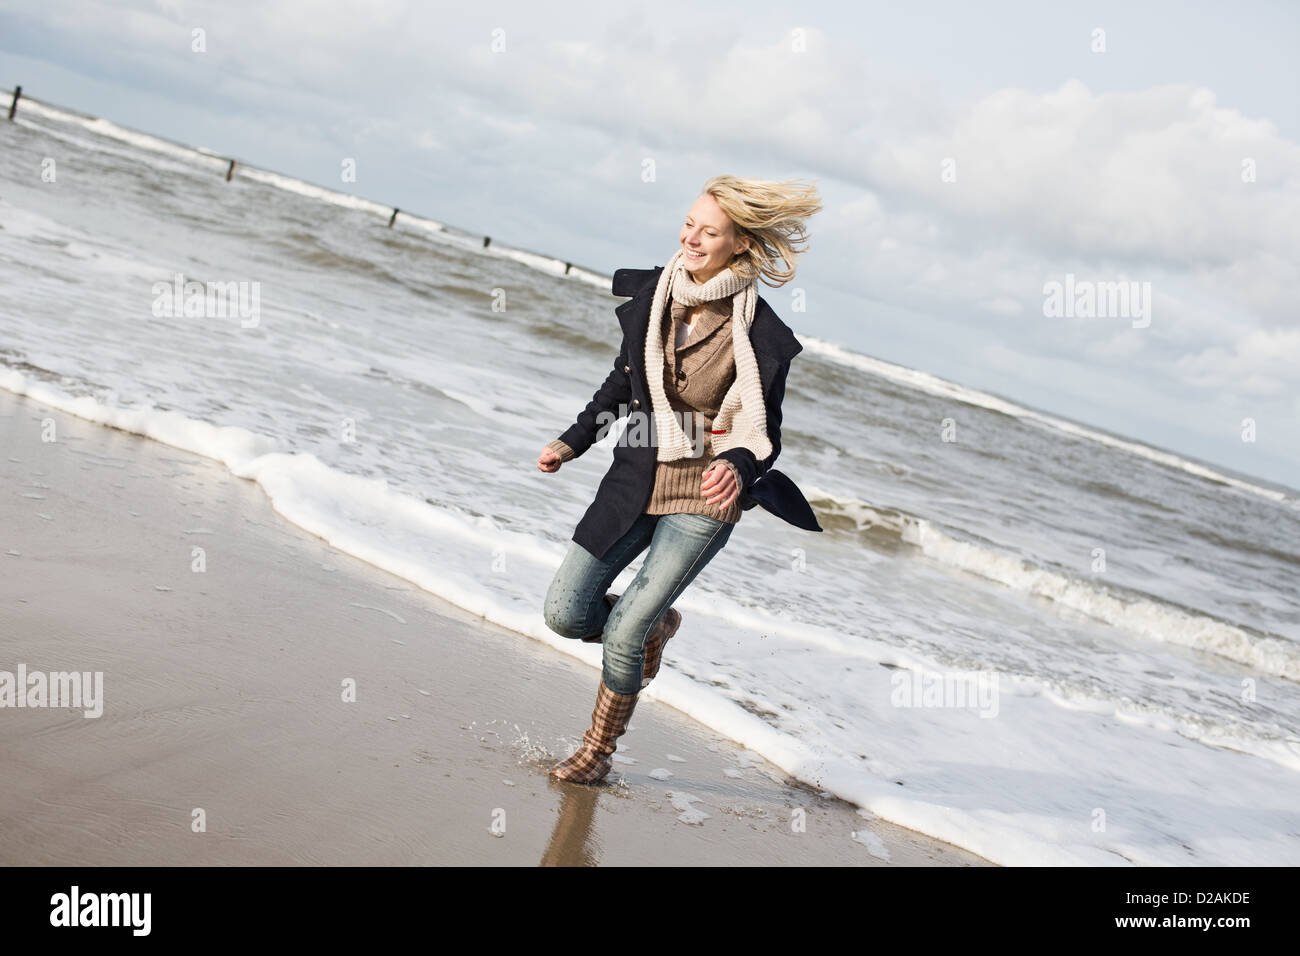 Smiling woman running on beach Stock Photo